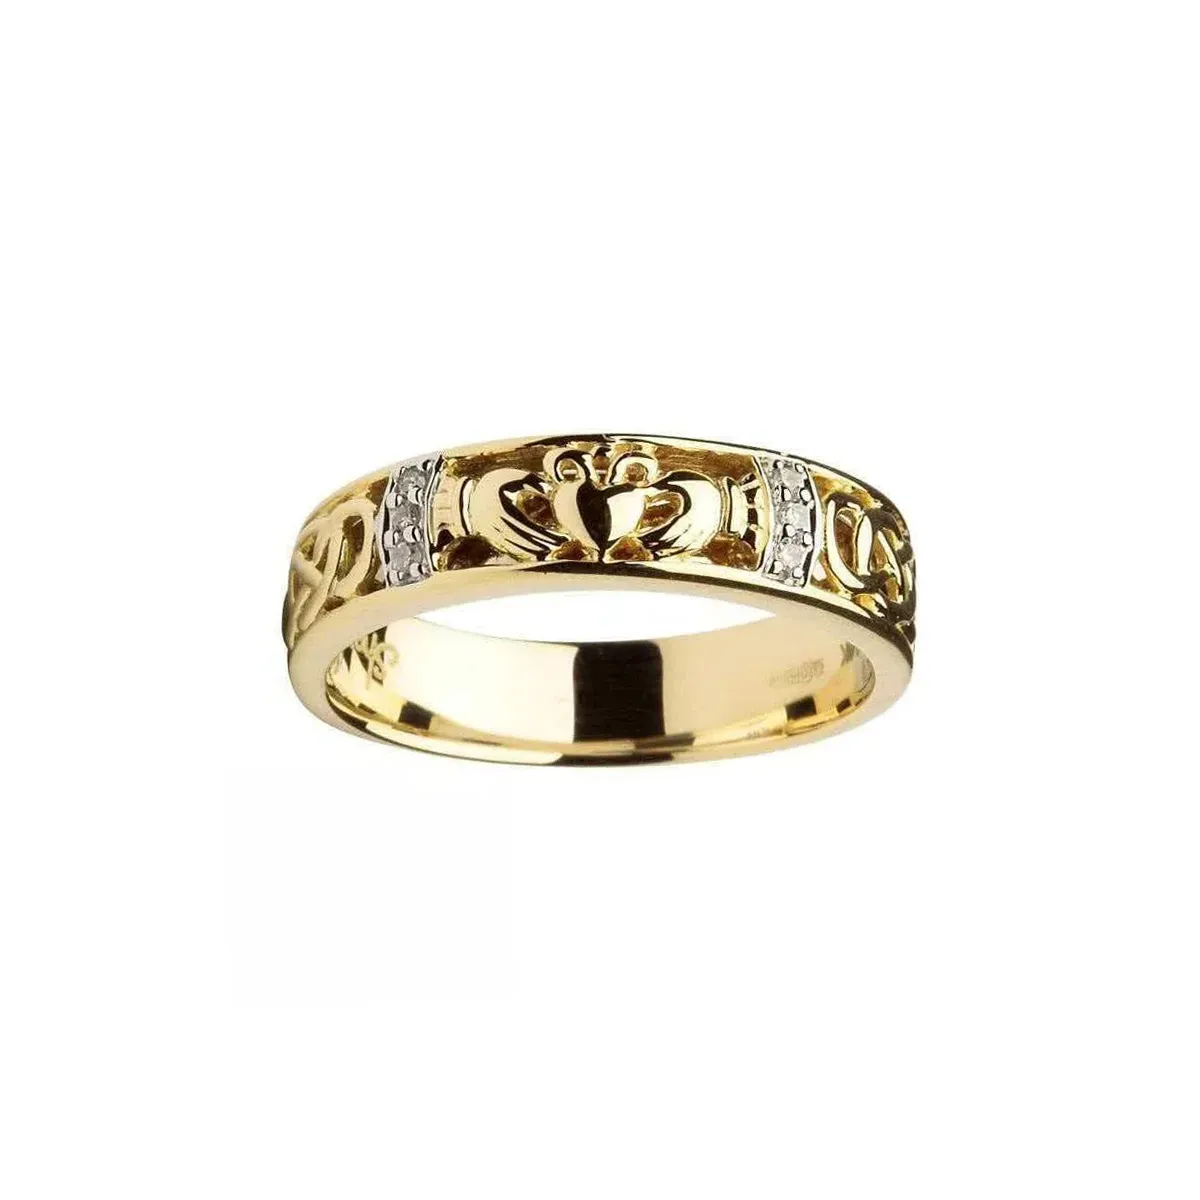 Claddagh Diamond ladies Wedding Ring With Celtic Knot Design